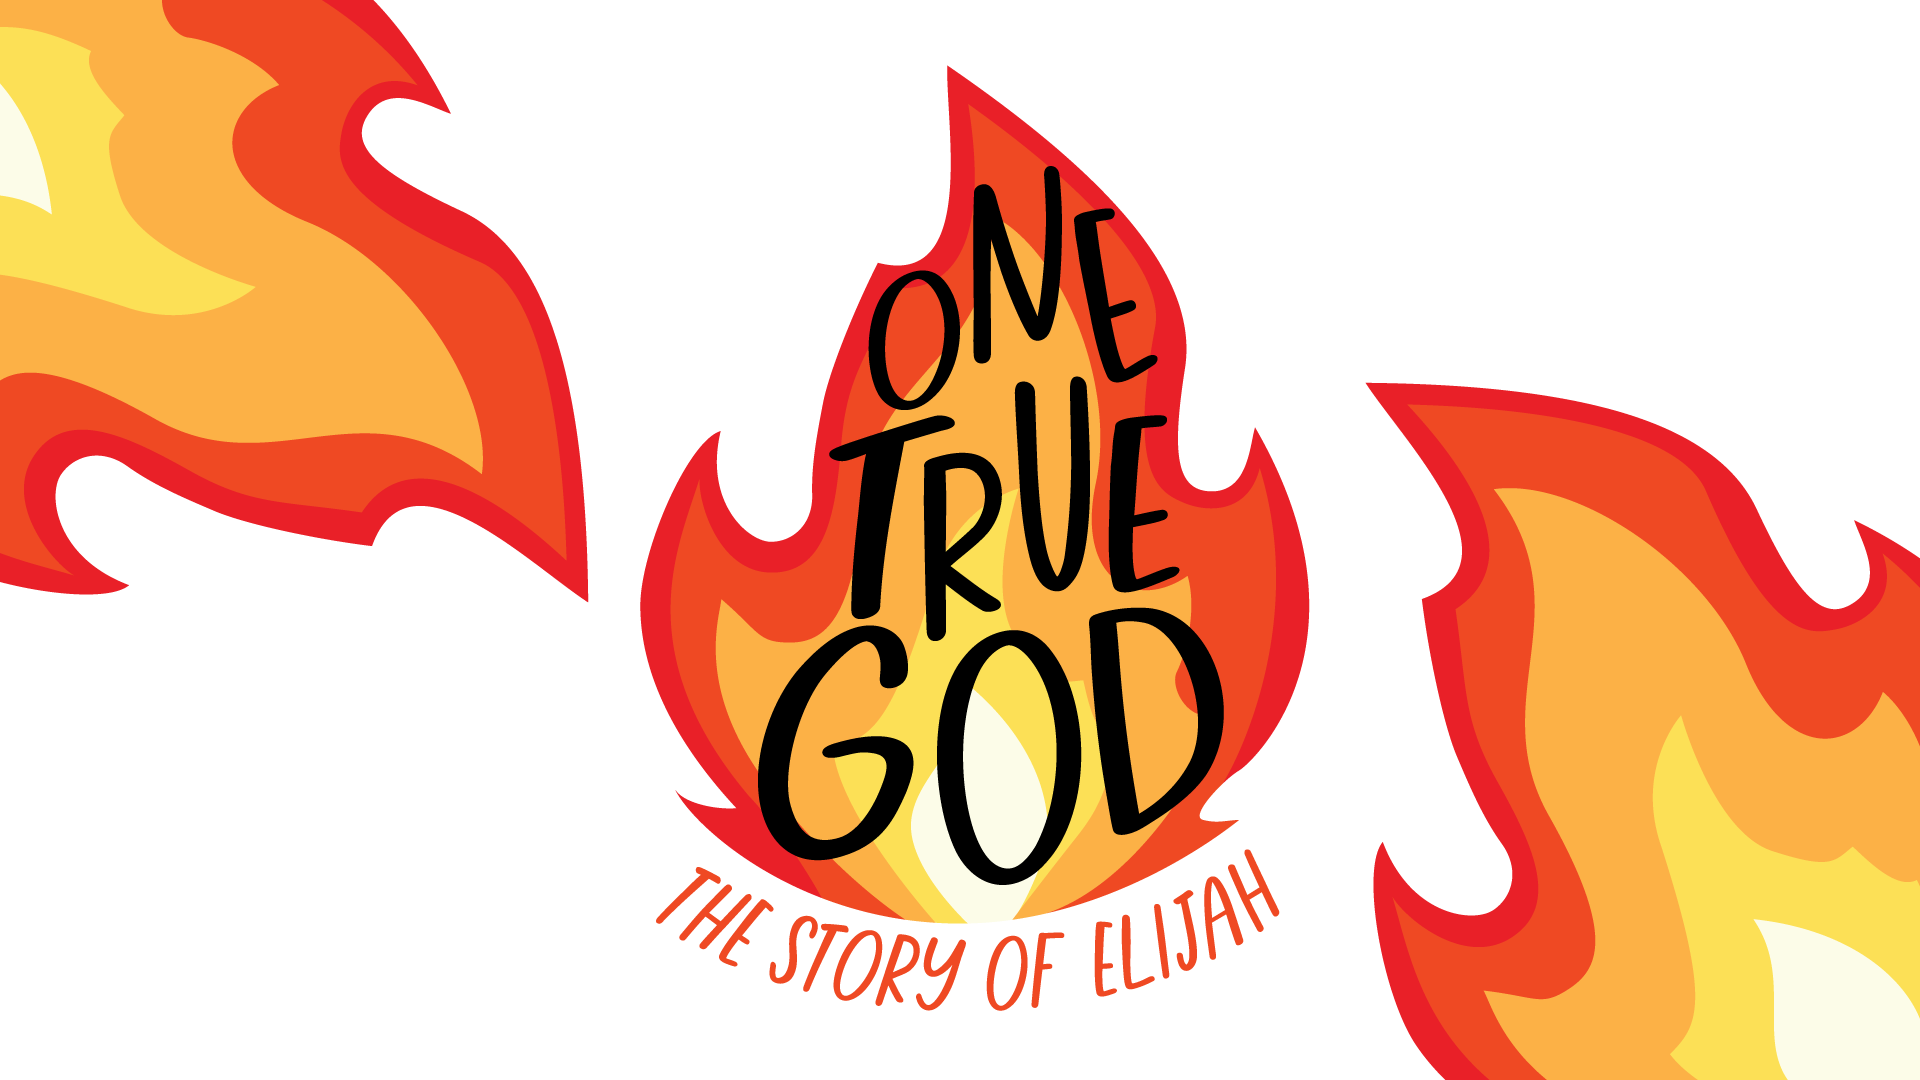 One True God | The Story of Elijah